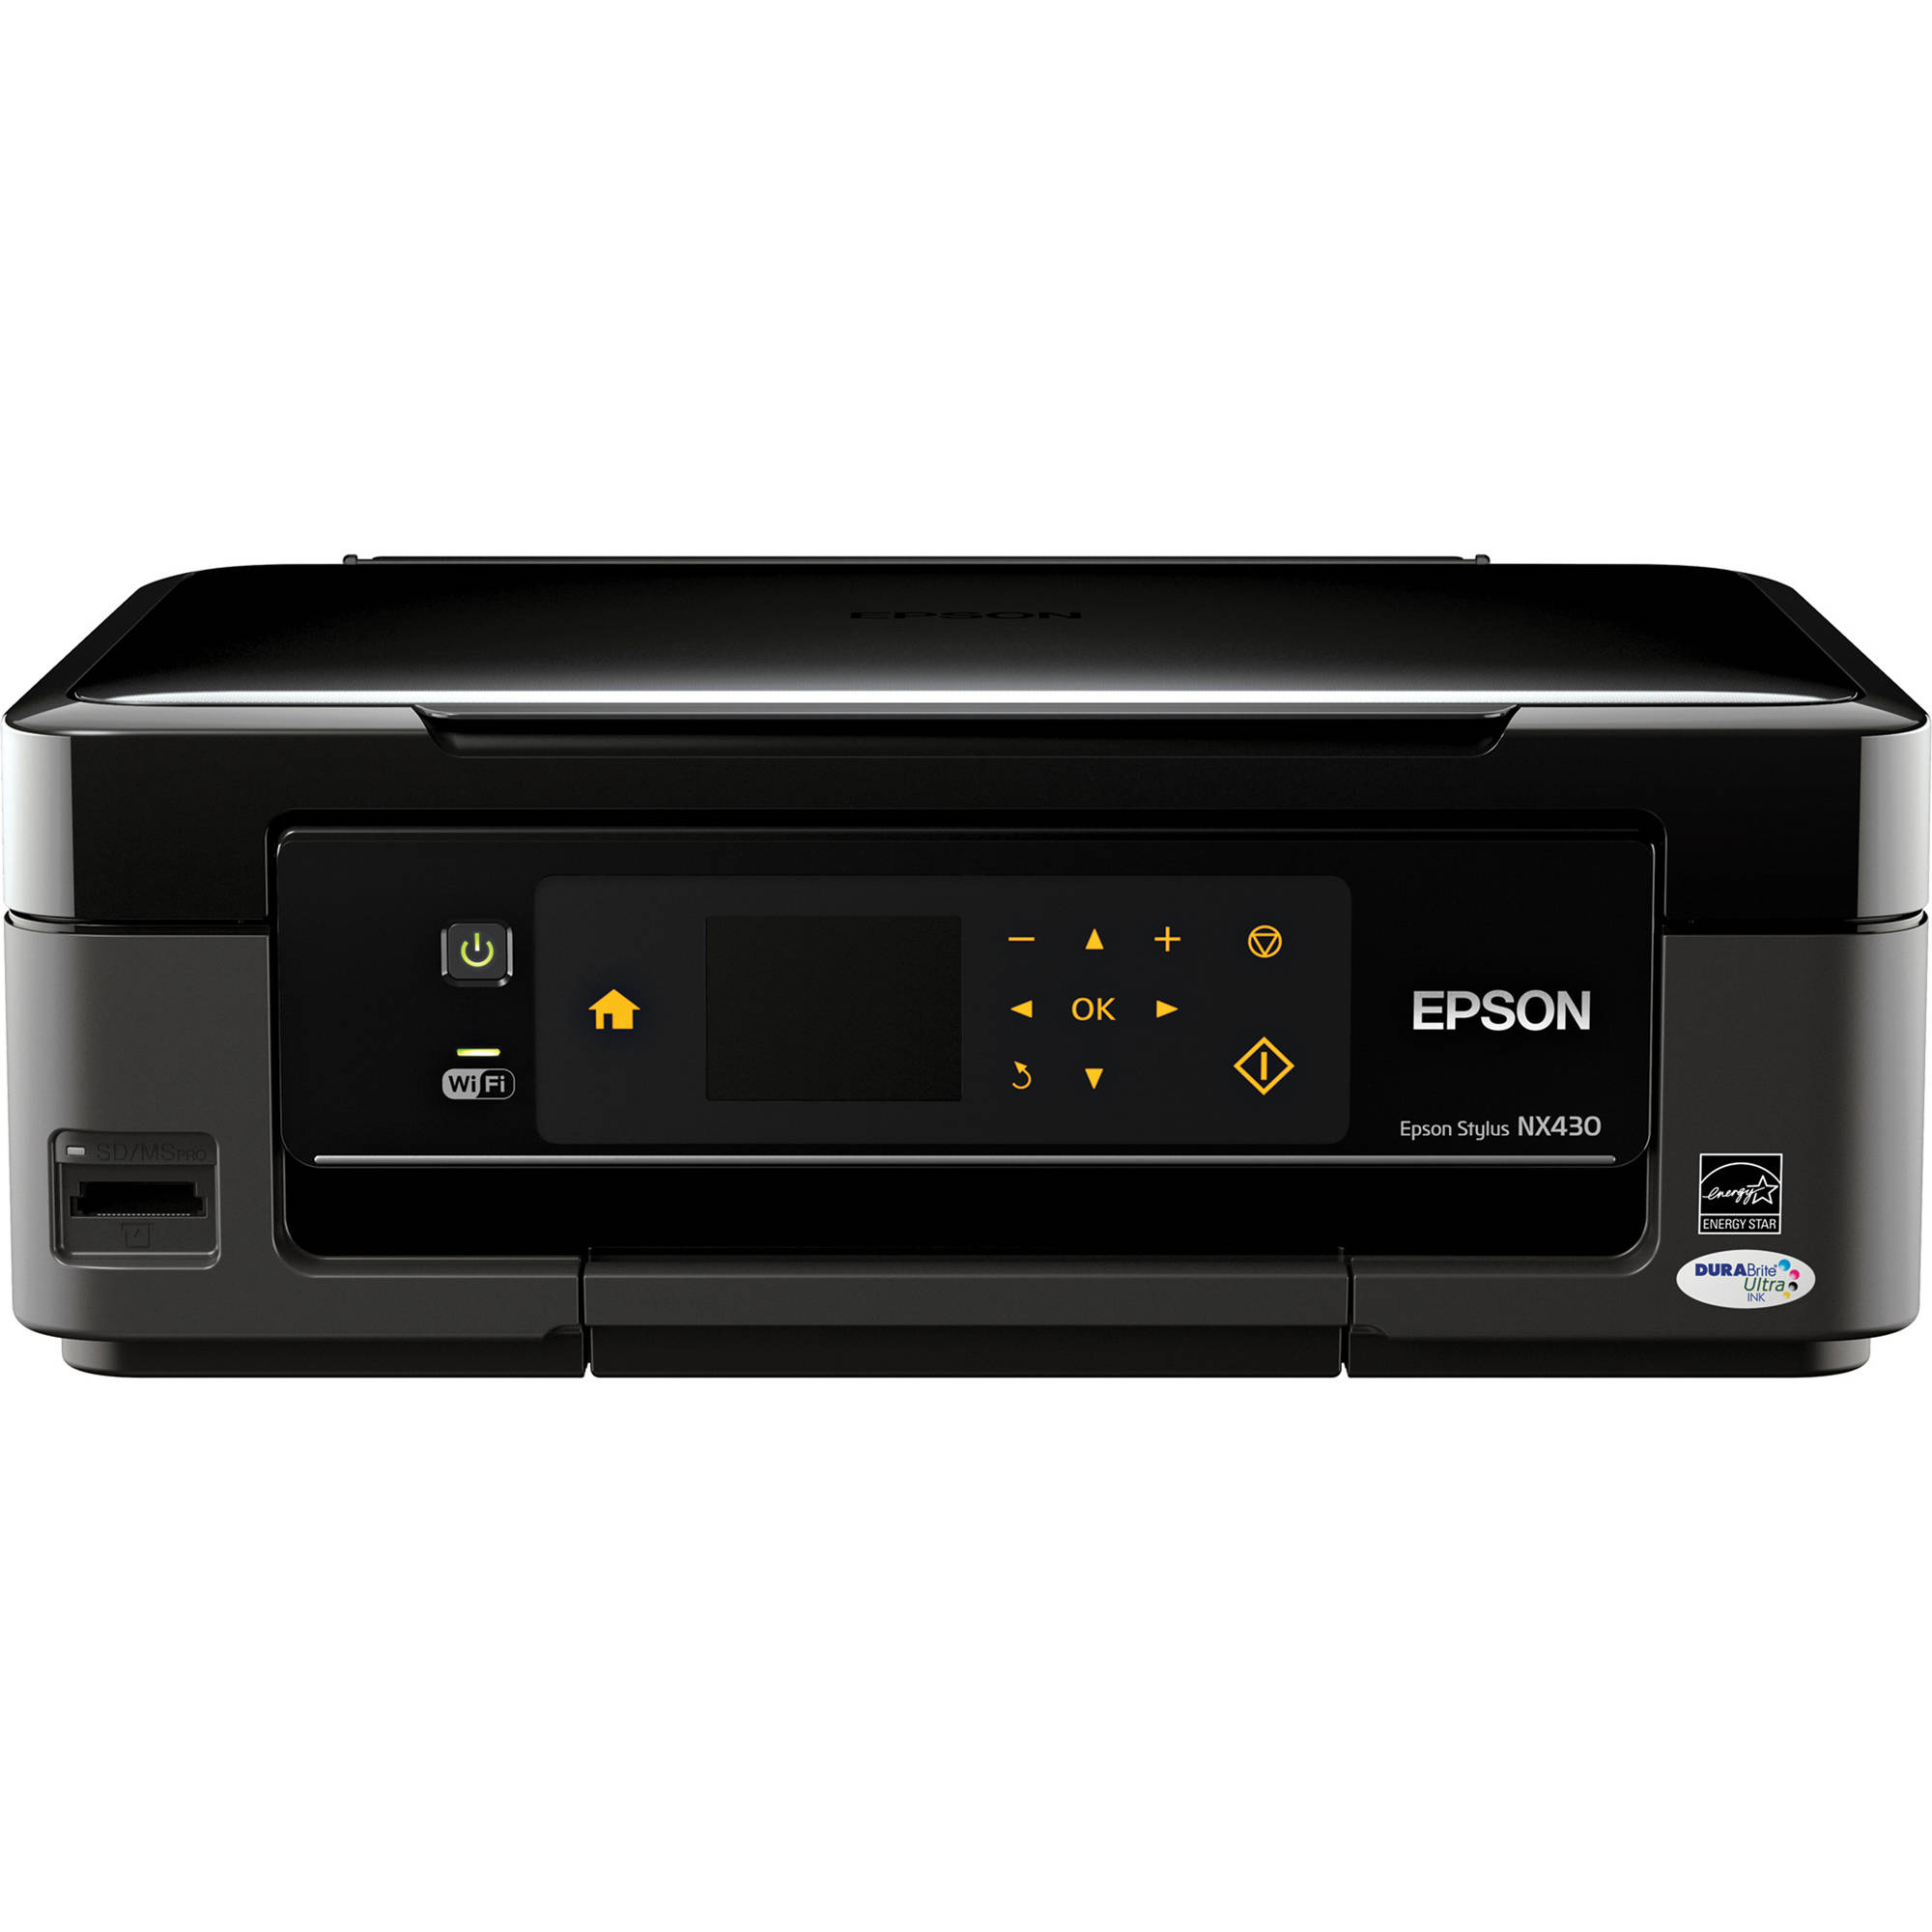 epson nx430 printer driver for mac